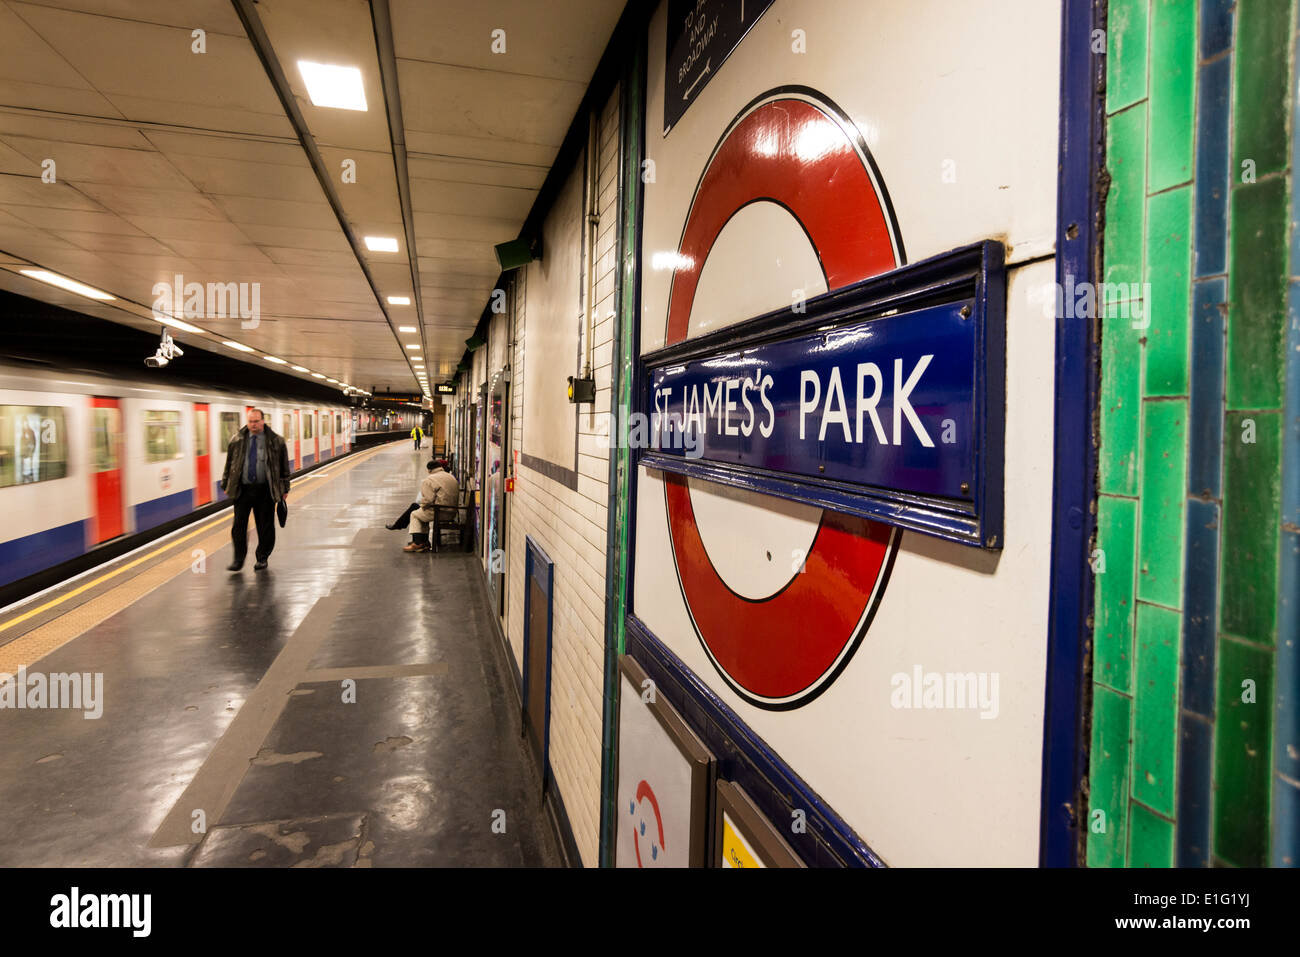 St James's Park Underground Station sign, London, UK Stock Photo